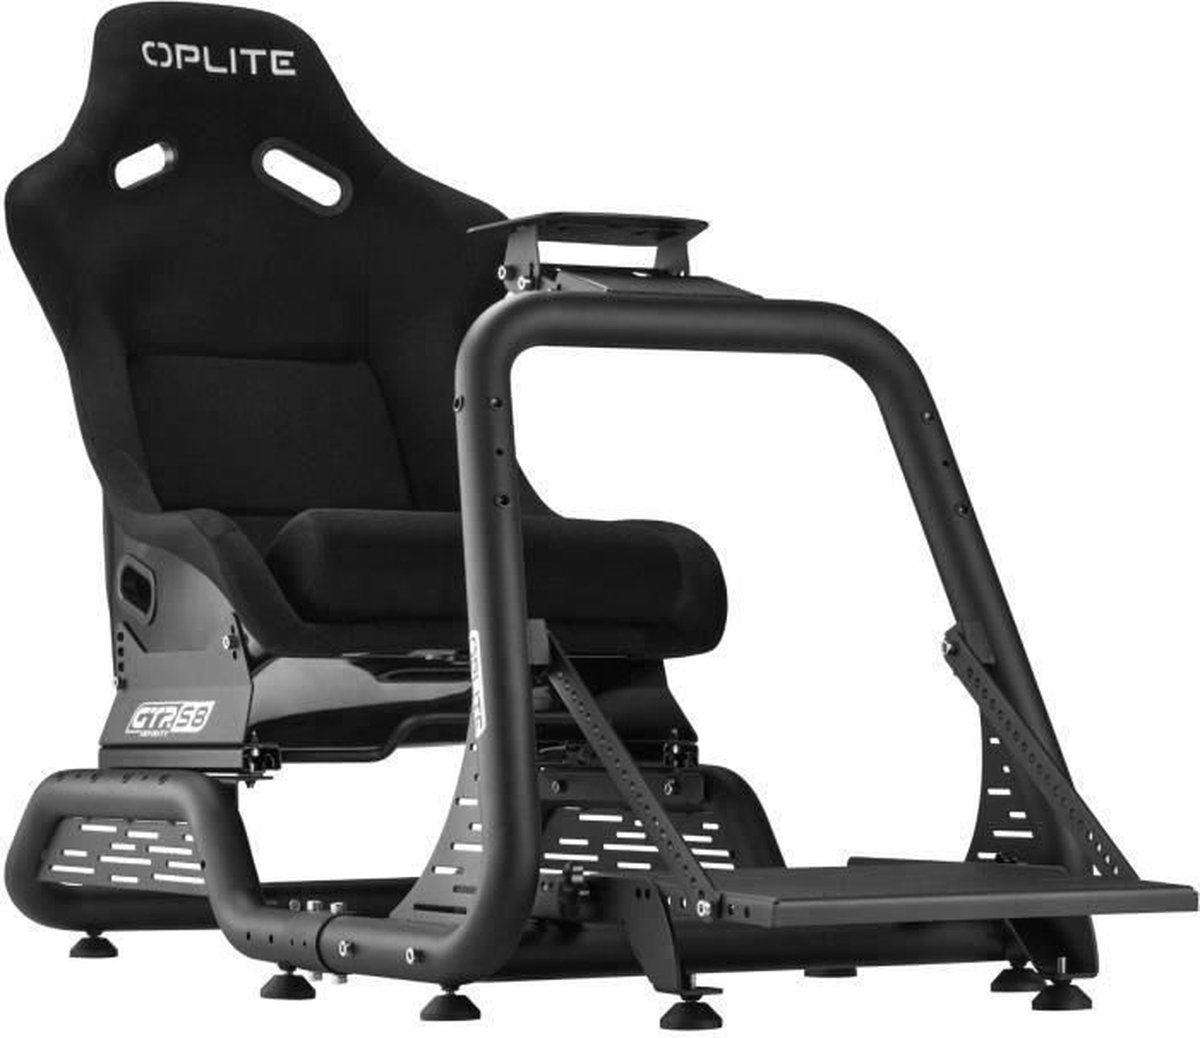 Cockpit racesimulatie - OPLITE - GTR S8 Infinity